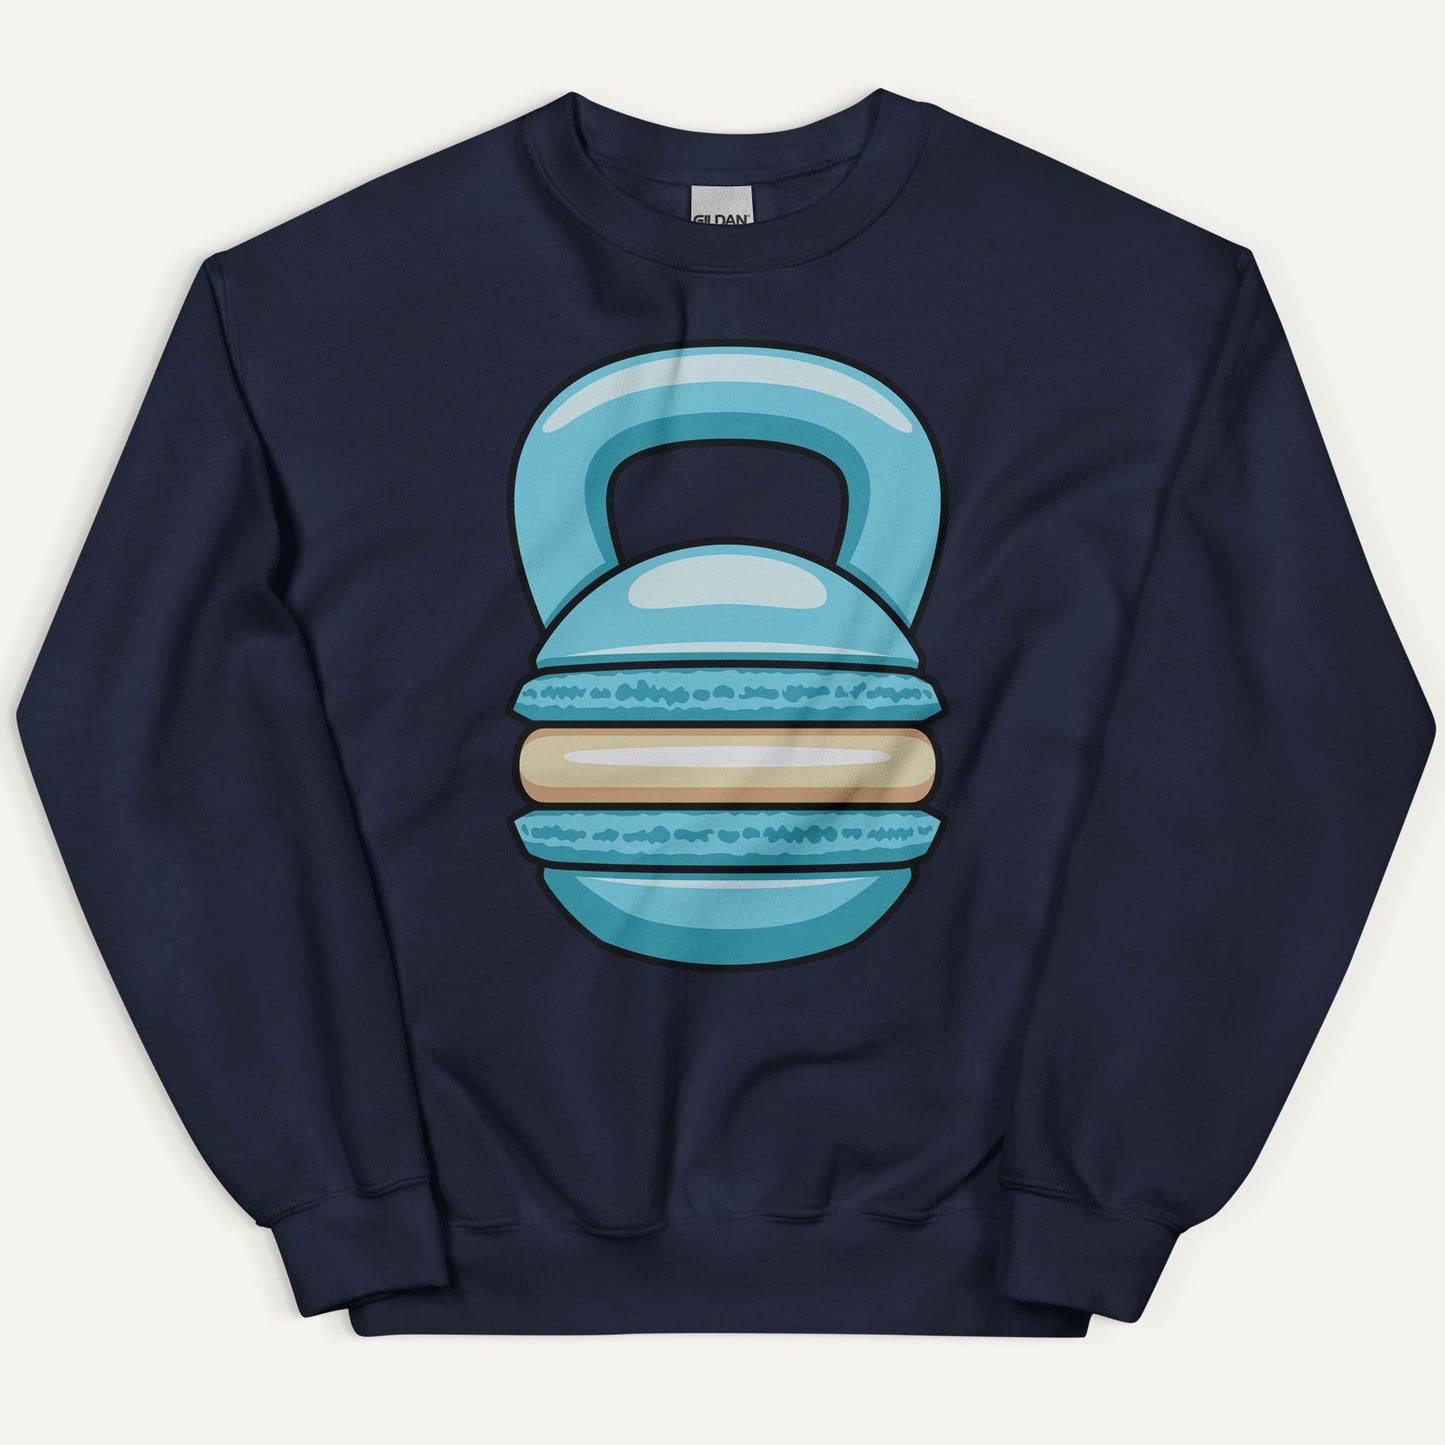 Blue Macaron Kettlebell Design Sweatshirt